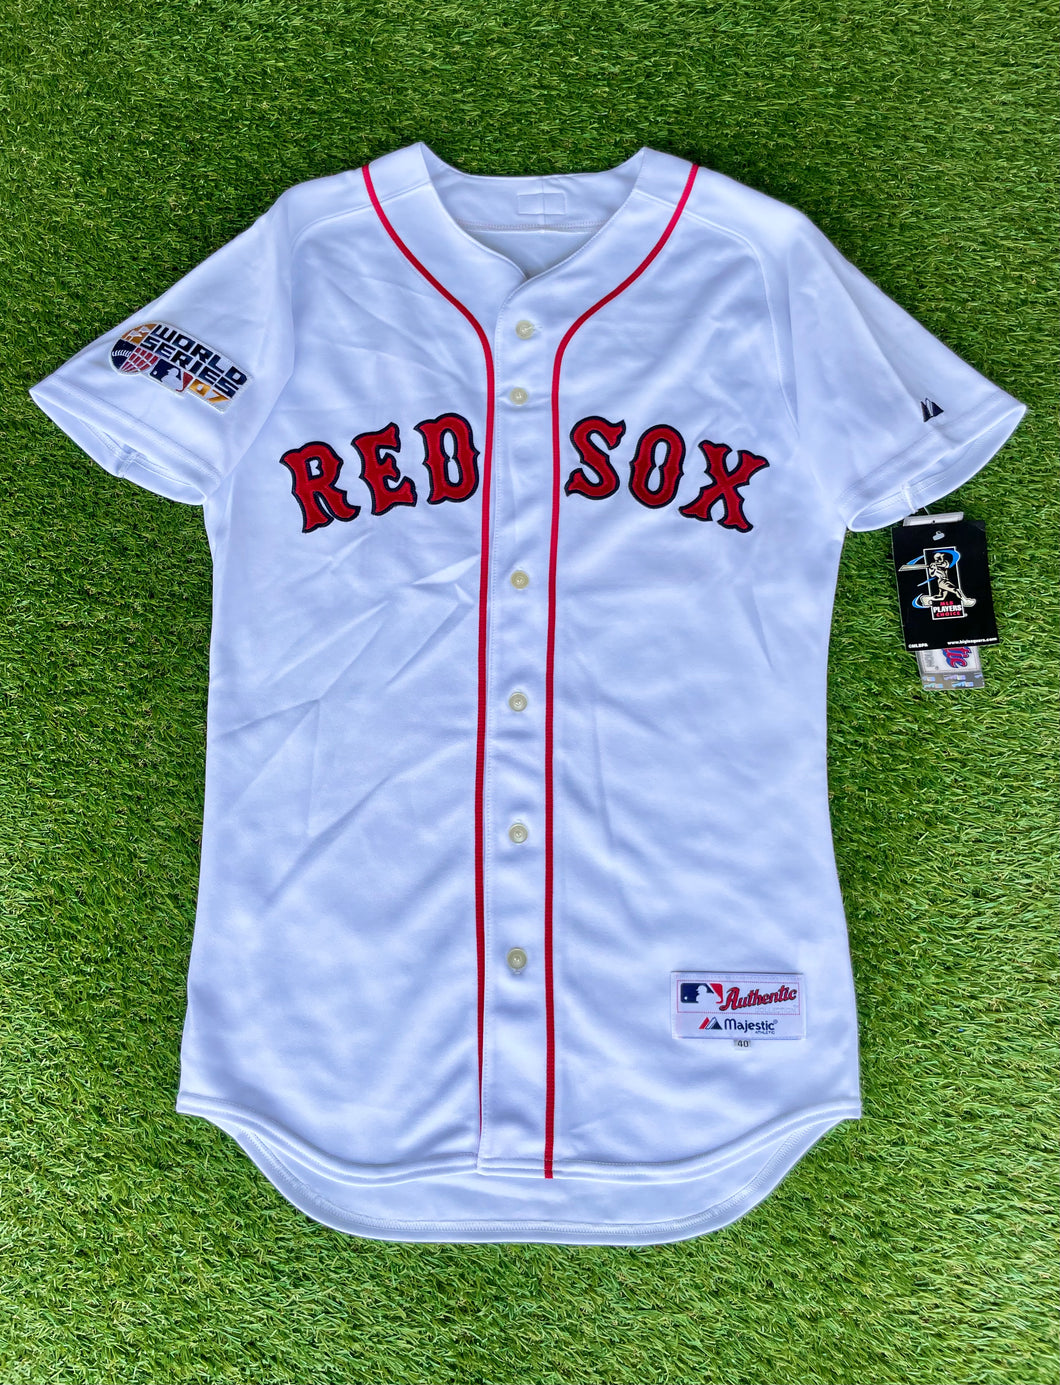 2007 World Series David Ortiz Boston Red Sox Jersey